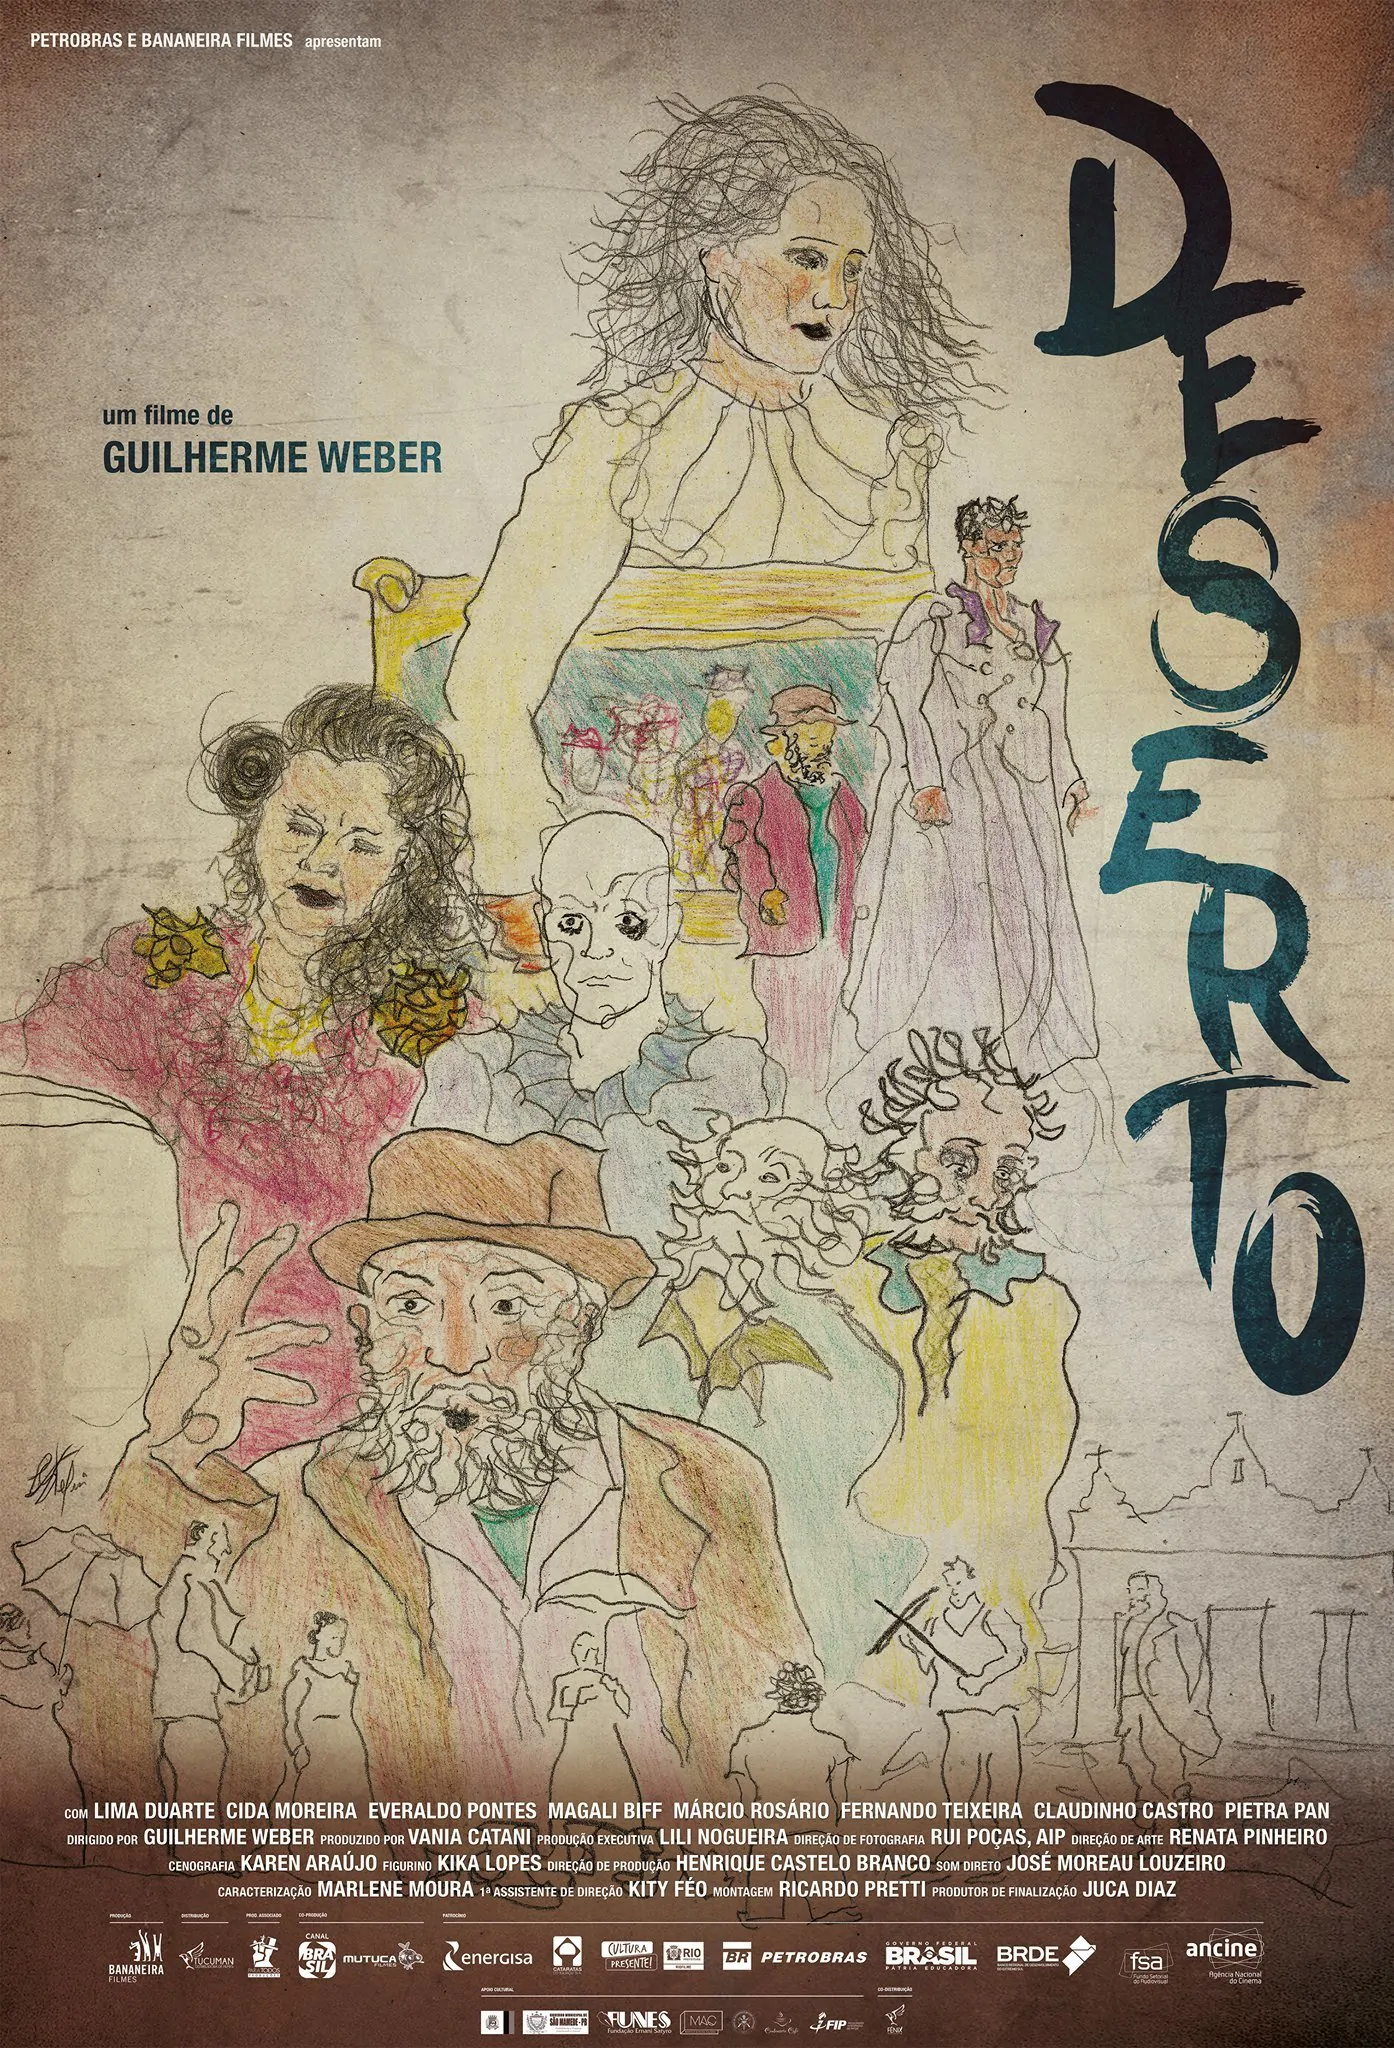 Poster for the movie "Deserto"